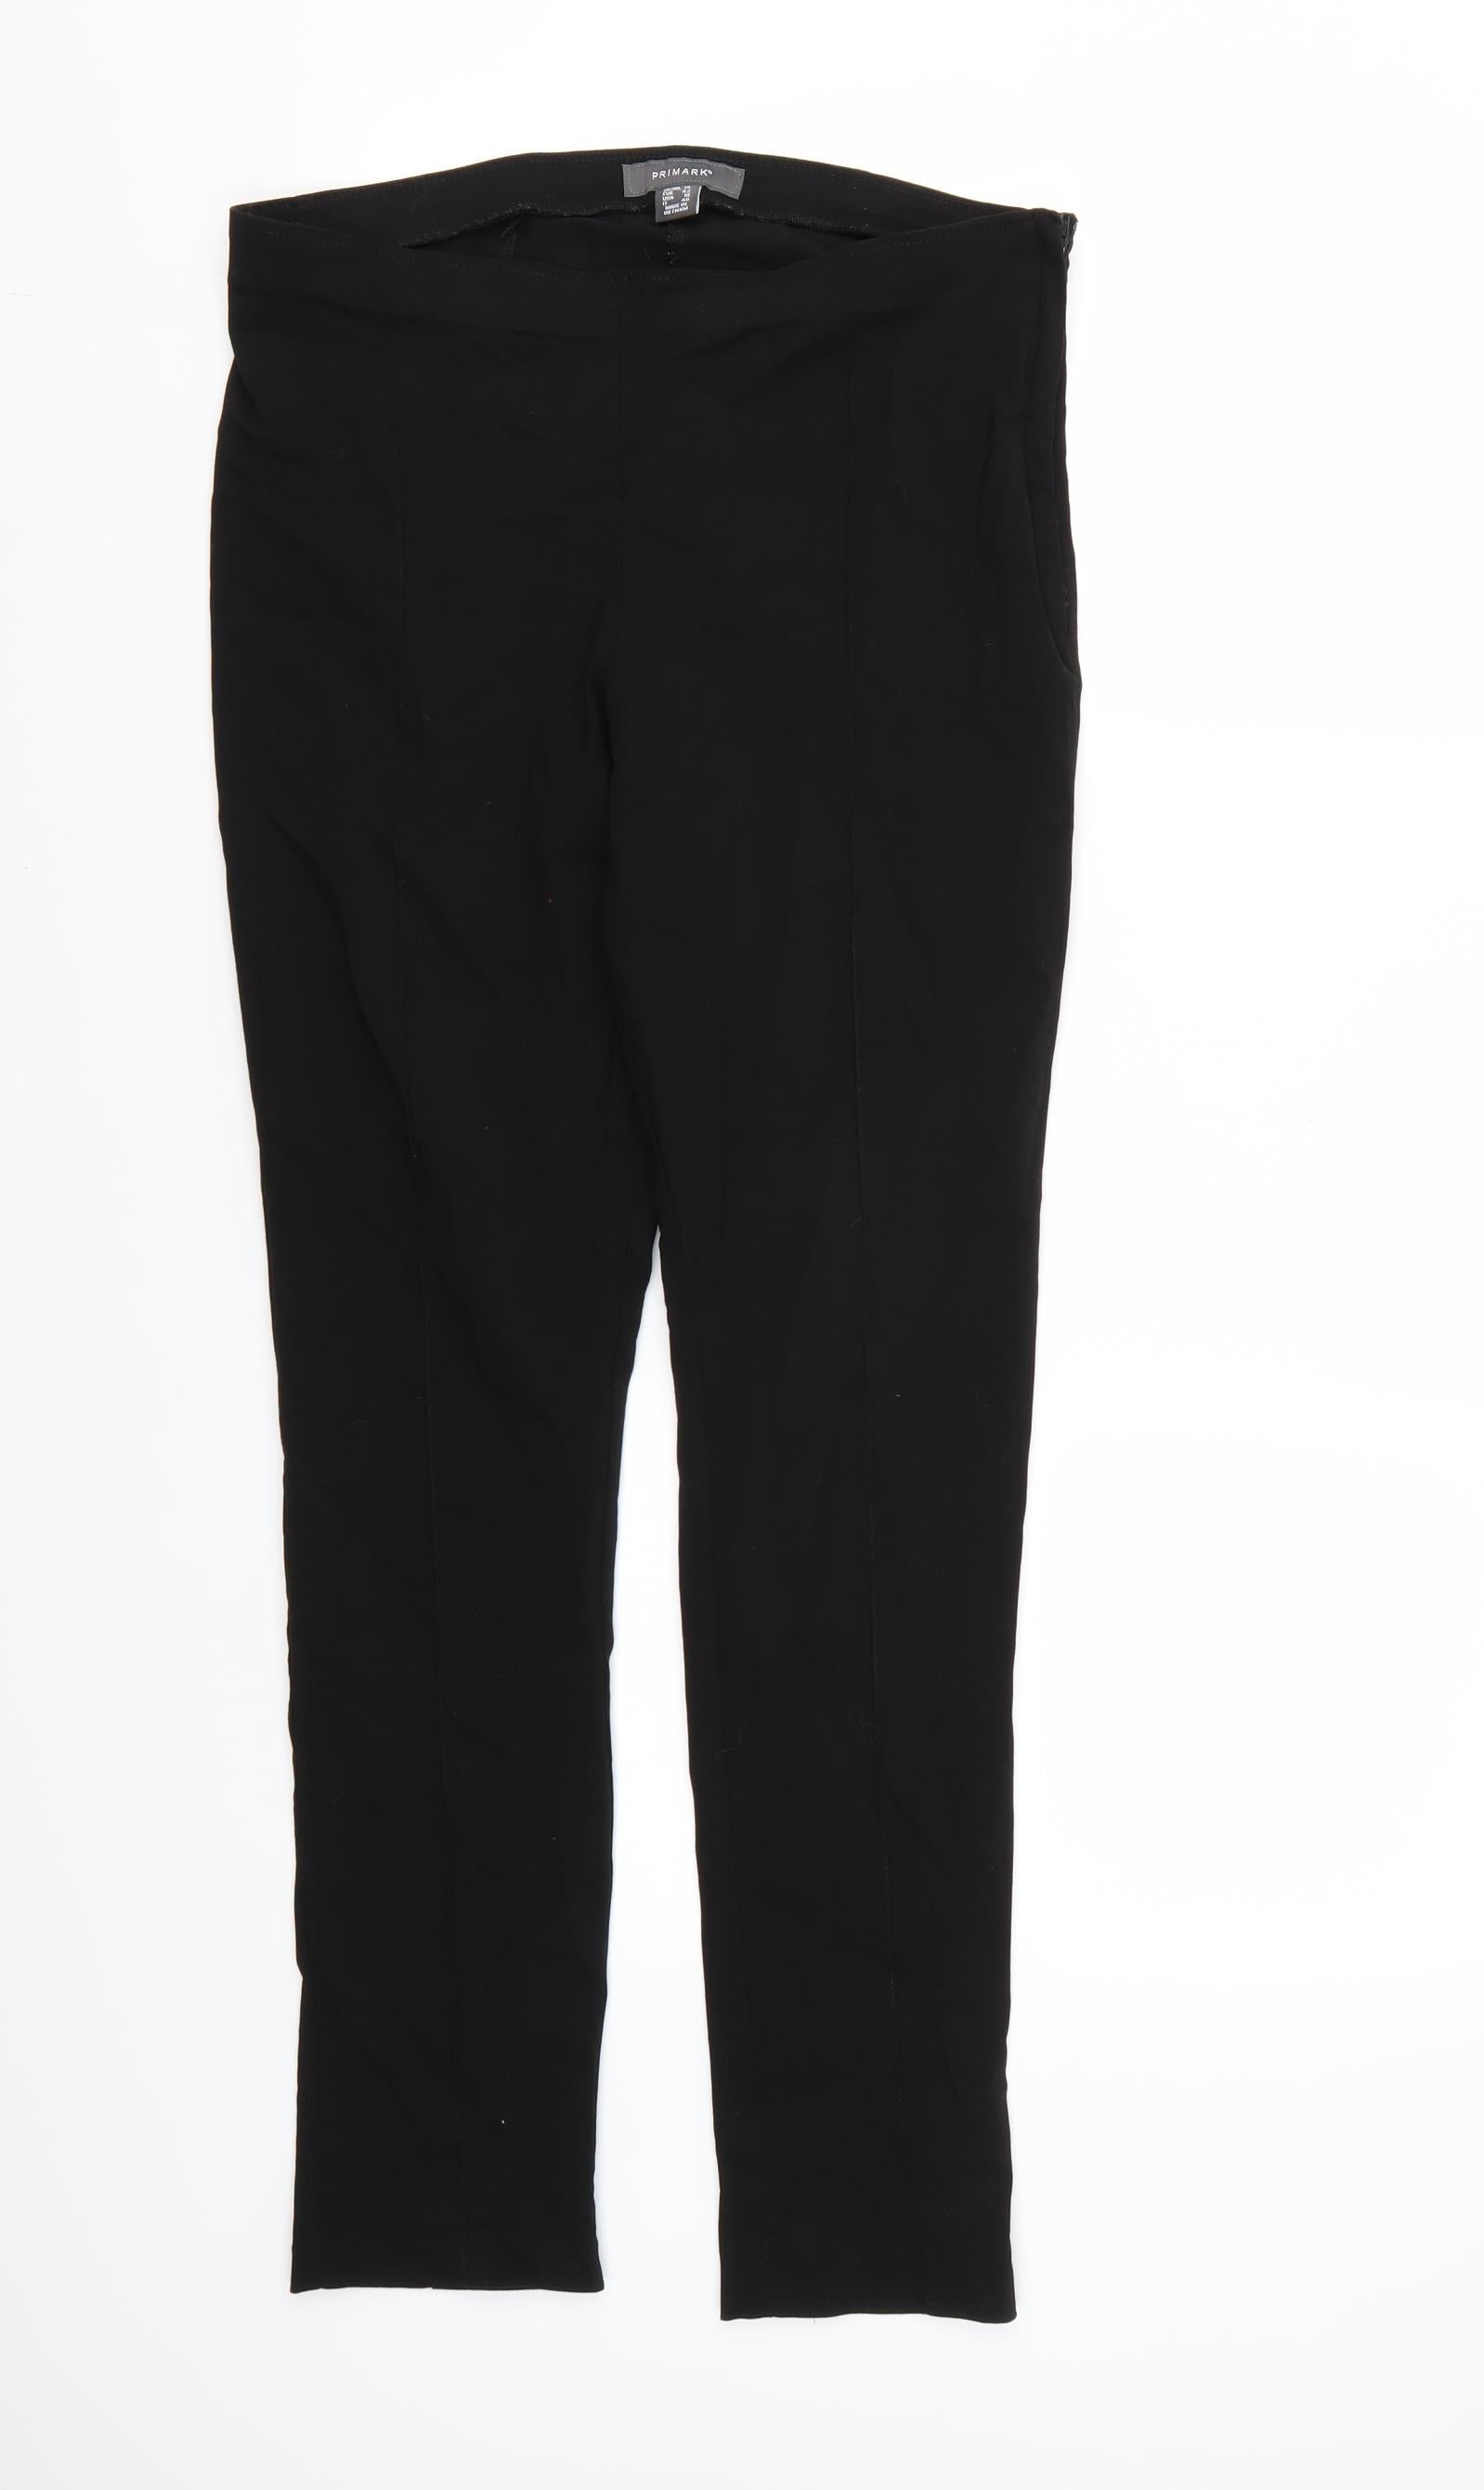 Primark Size 12 Ladies Black Straight Leg Trousers | eBay